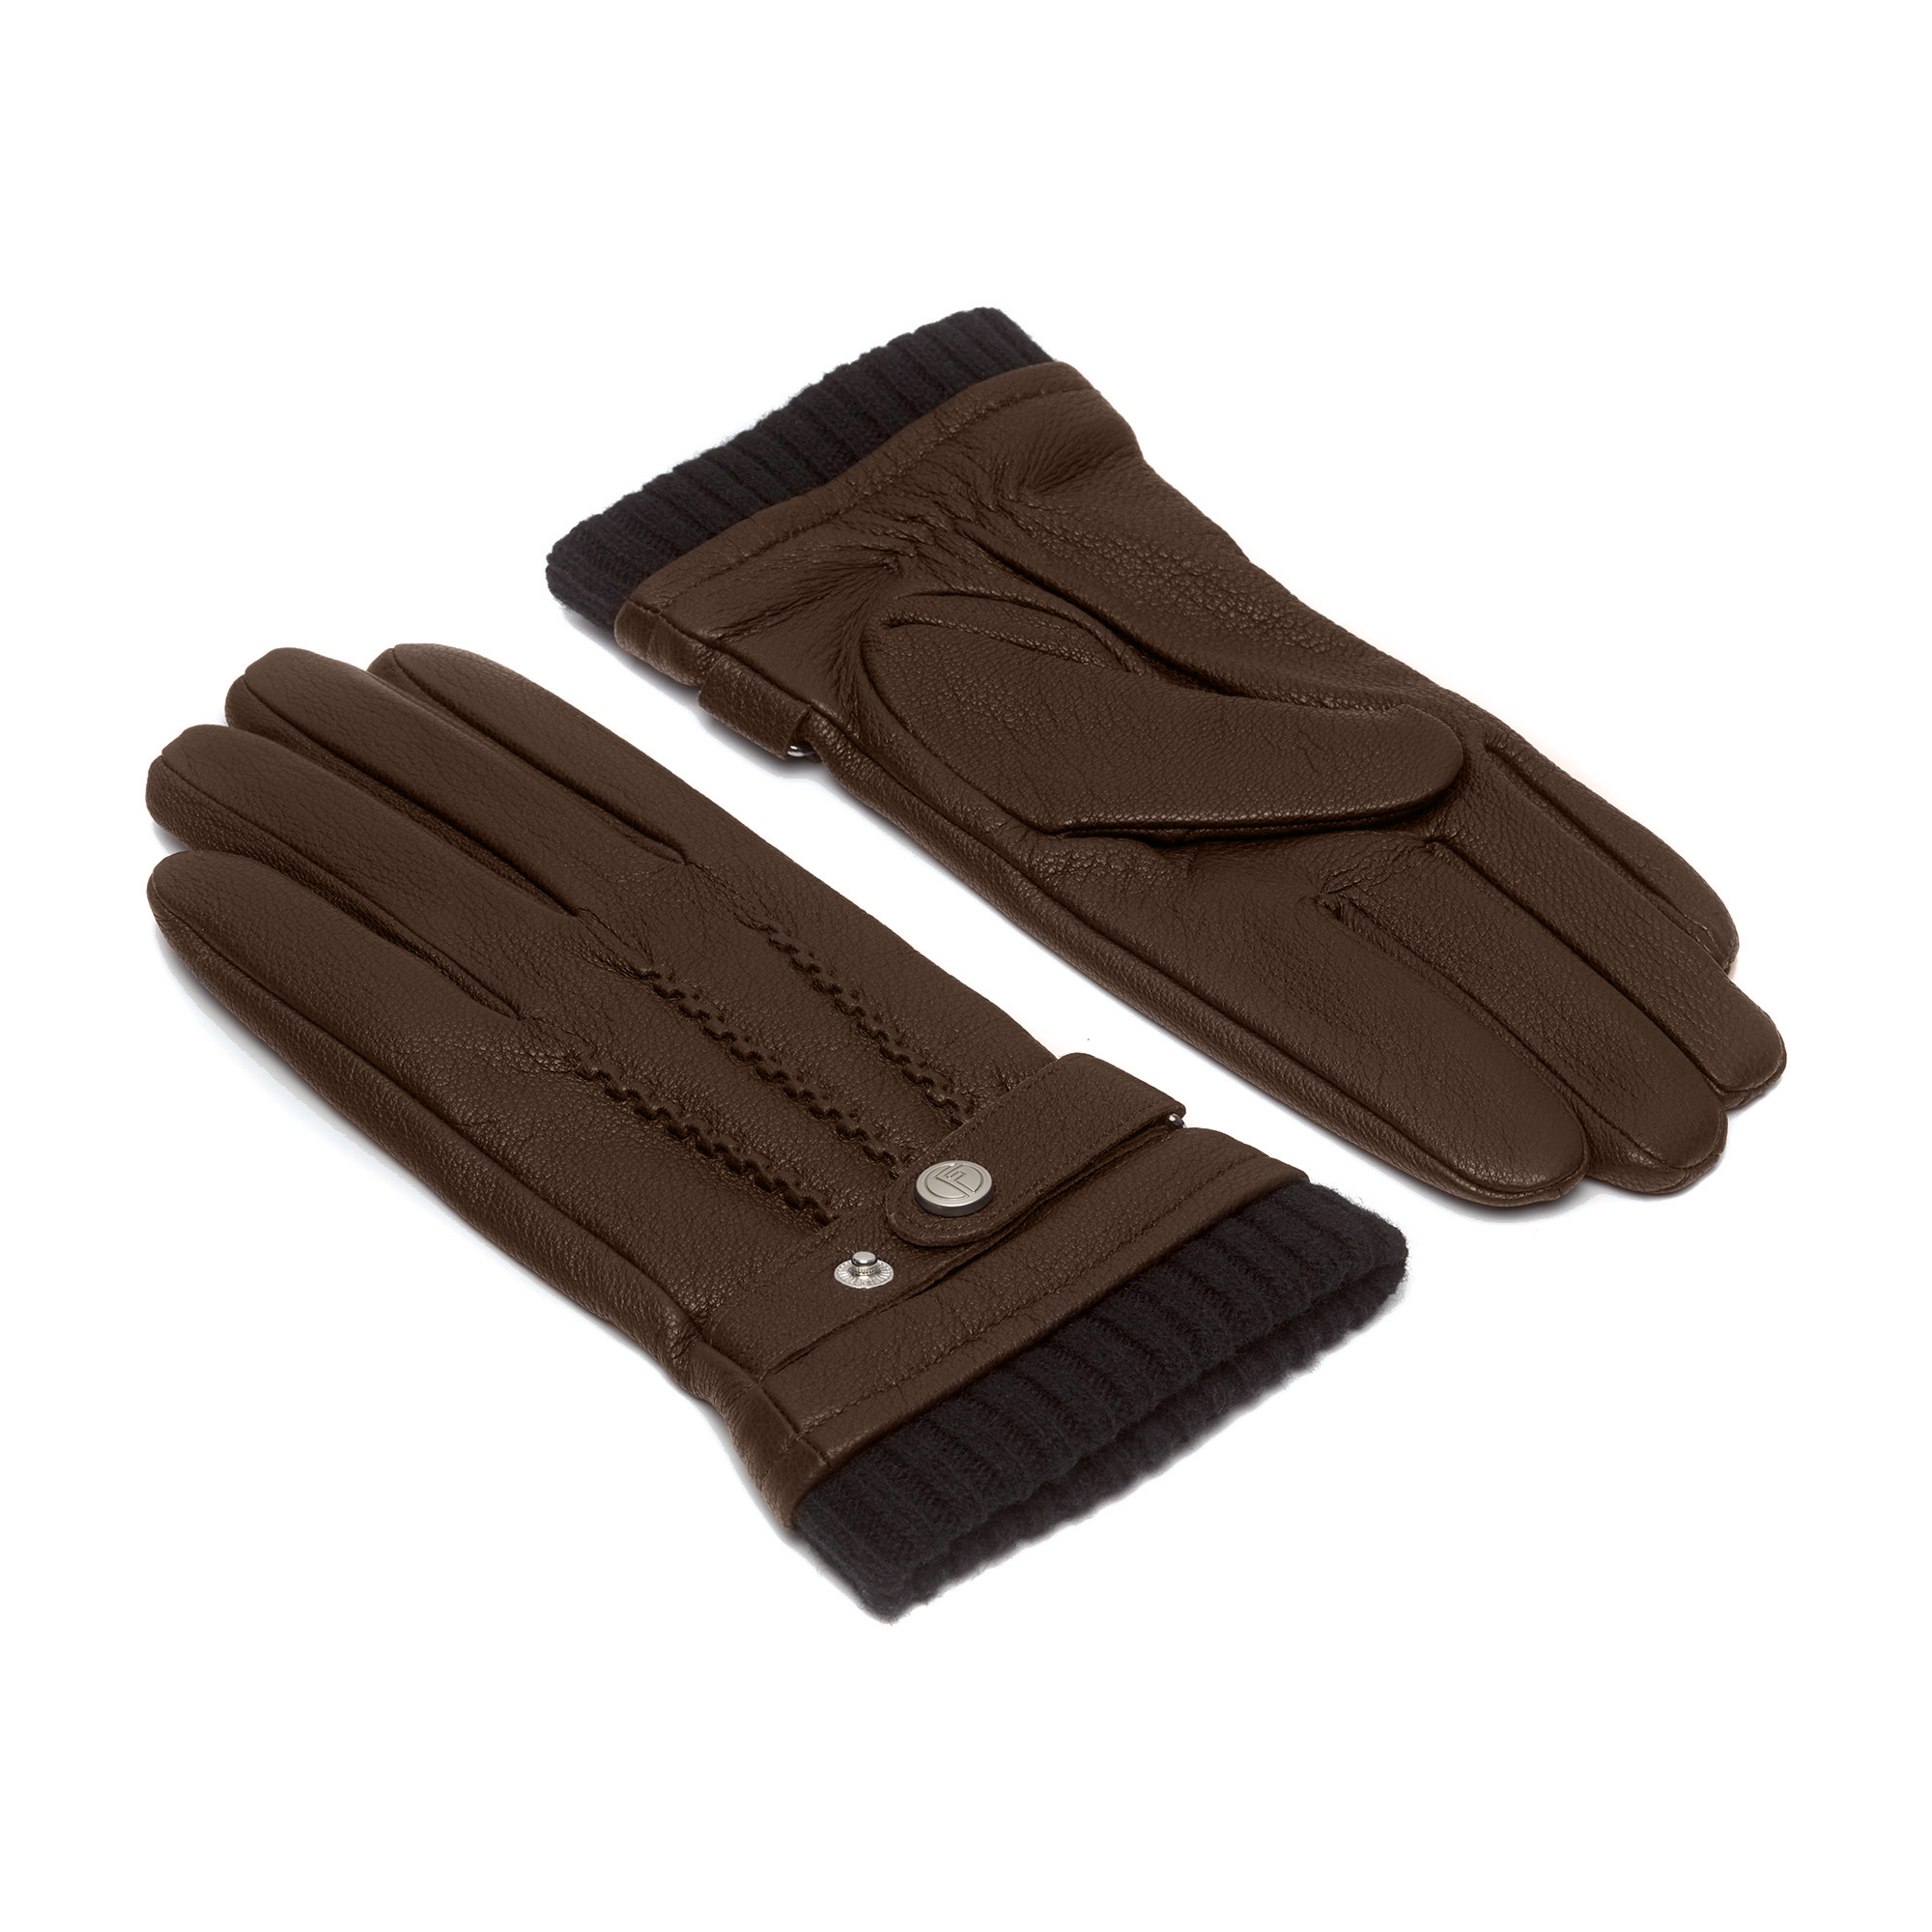 Braune Lederhandschuhe für Männer | Jack (Ziegenleder) - Braune  Lederhandschuhe für Männer mit Gürtel, 100% Wollfutter &  Touchscreen-Funktion | Frickin